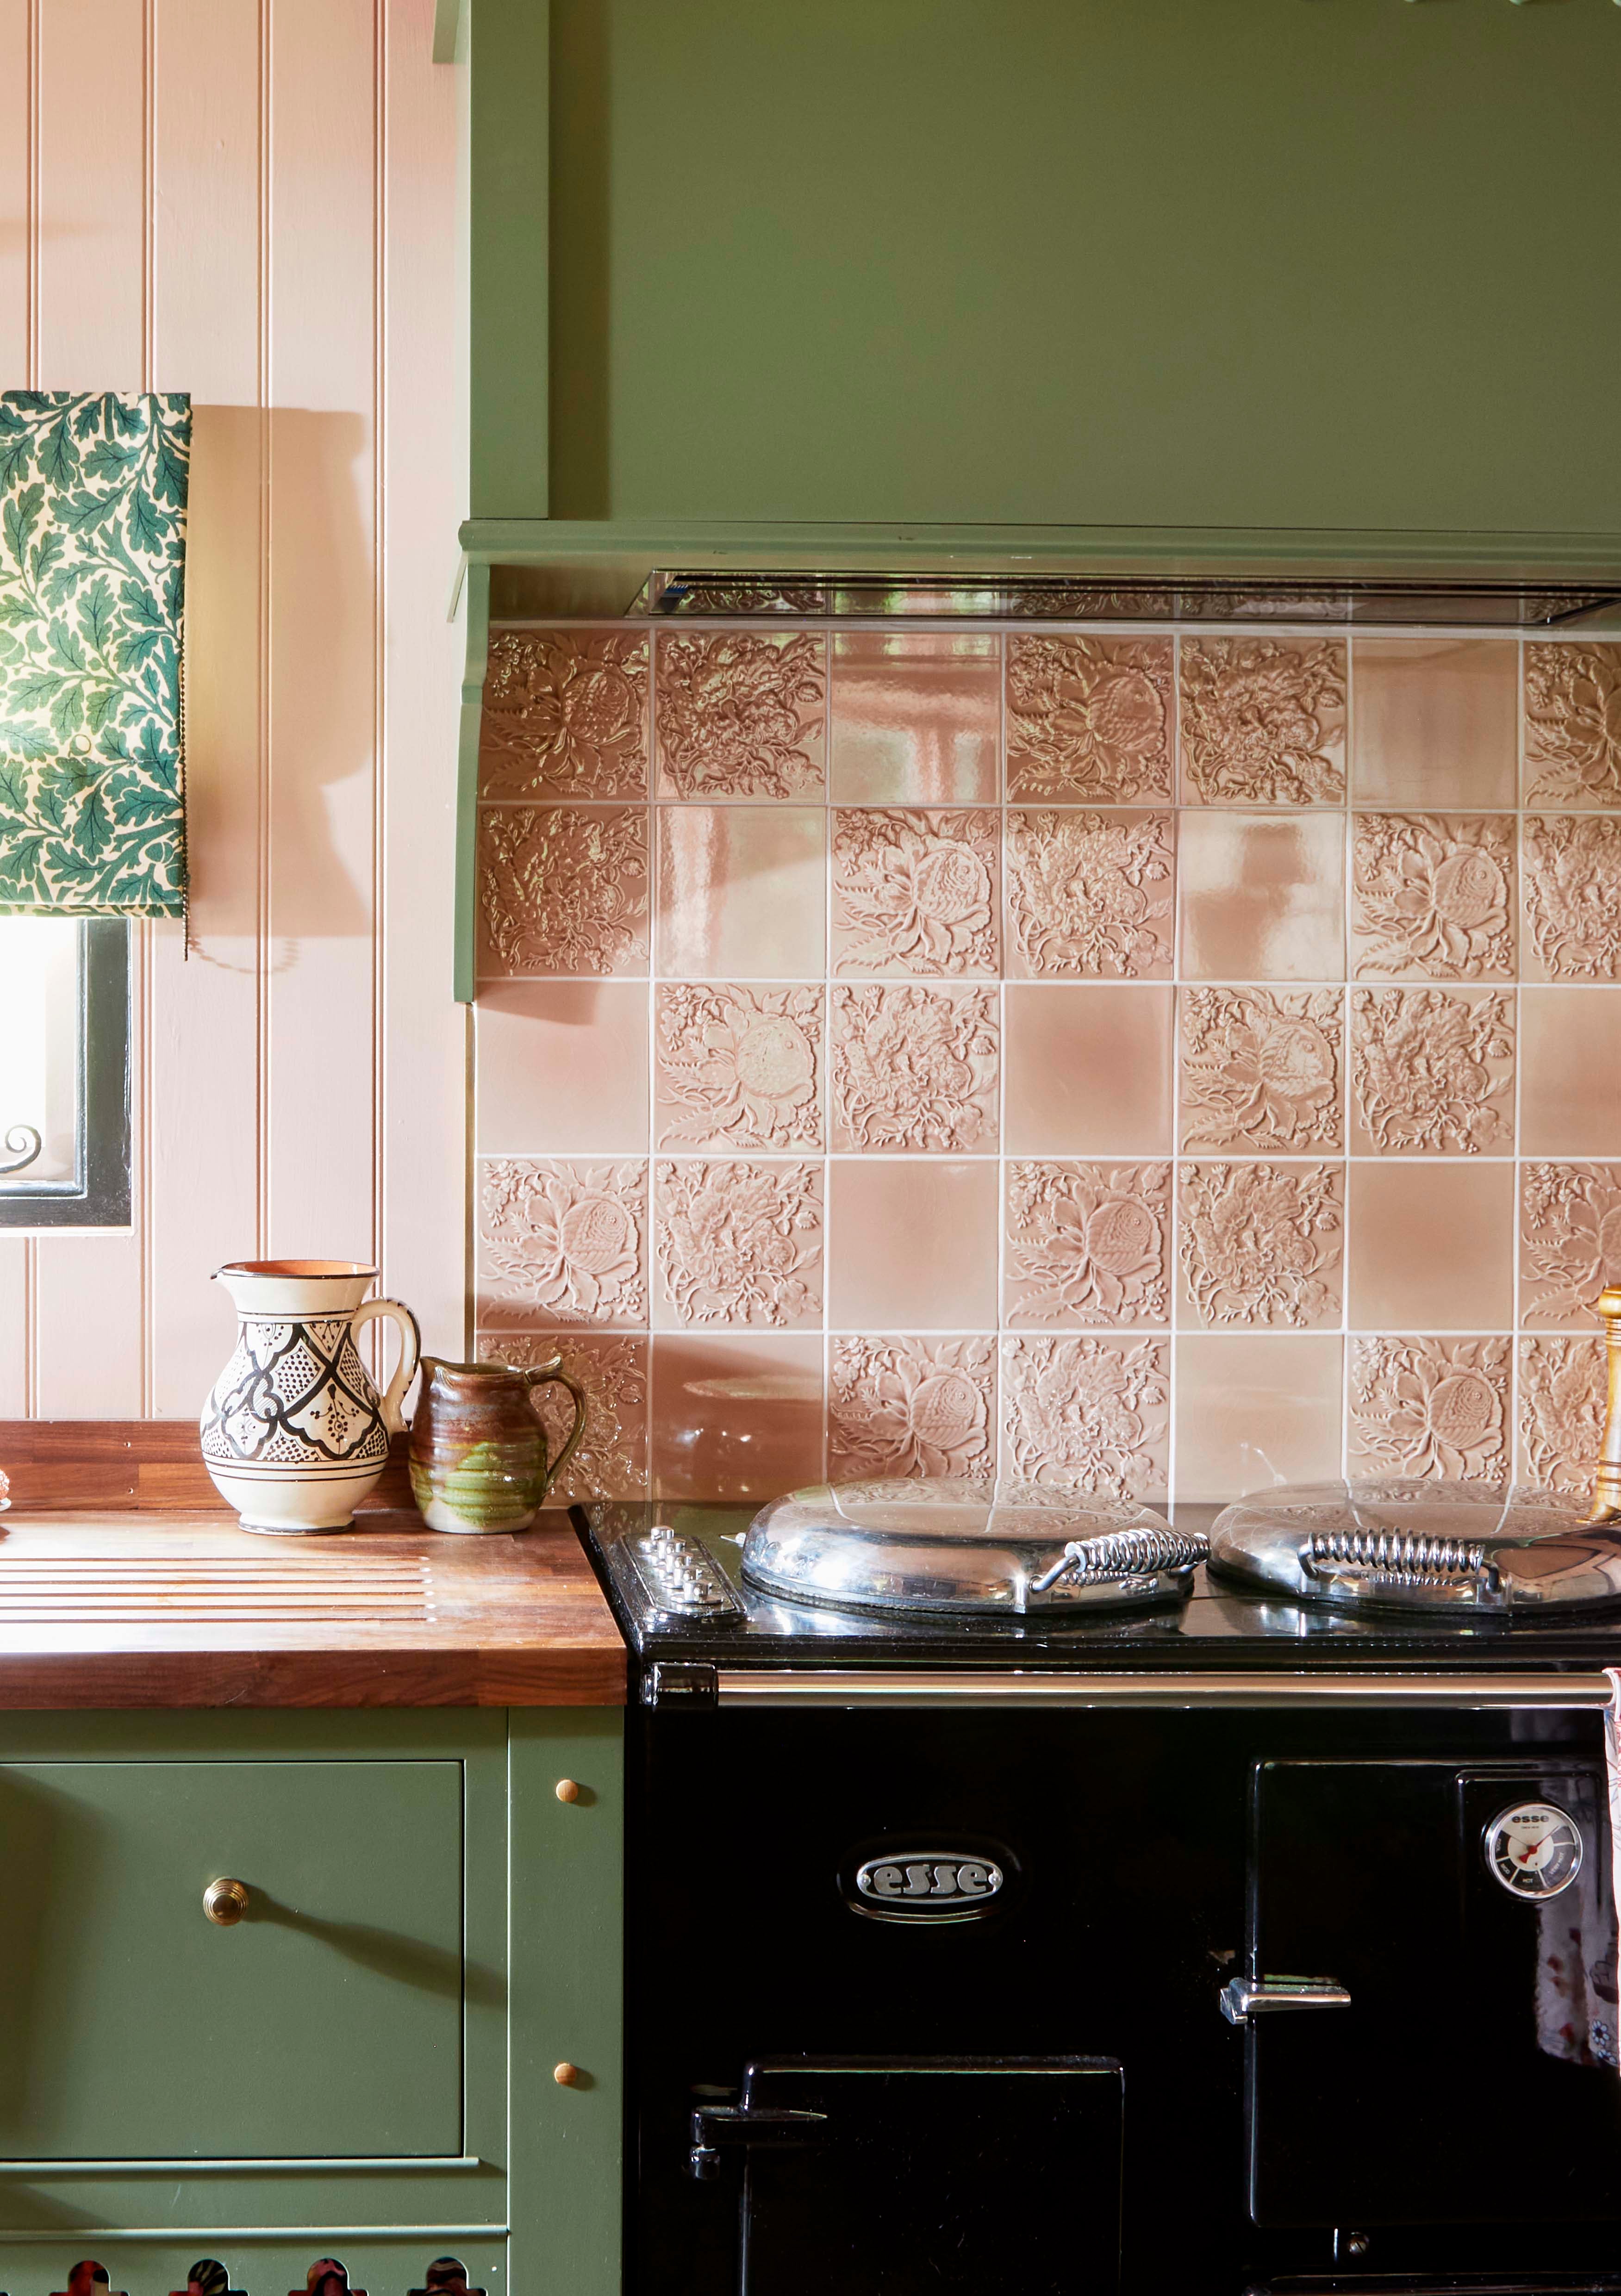 Craven Dunnill Jackfield has been producing exquisite Victorian-style tiles